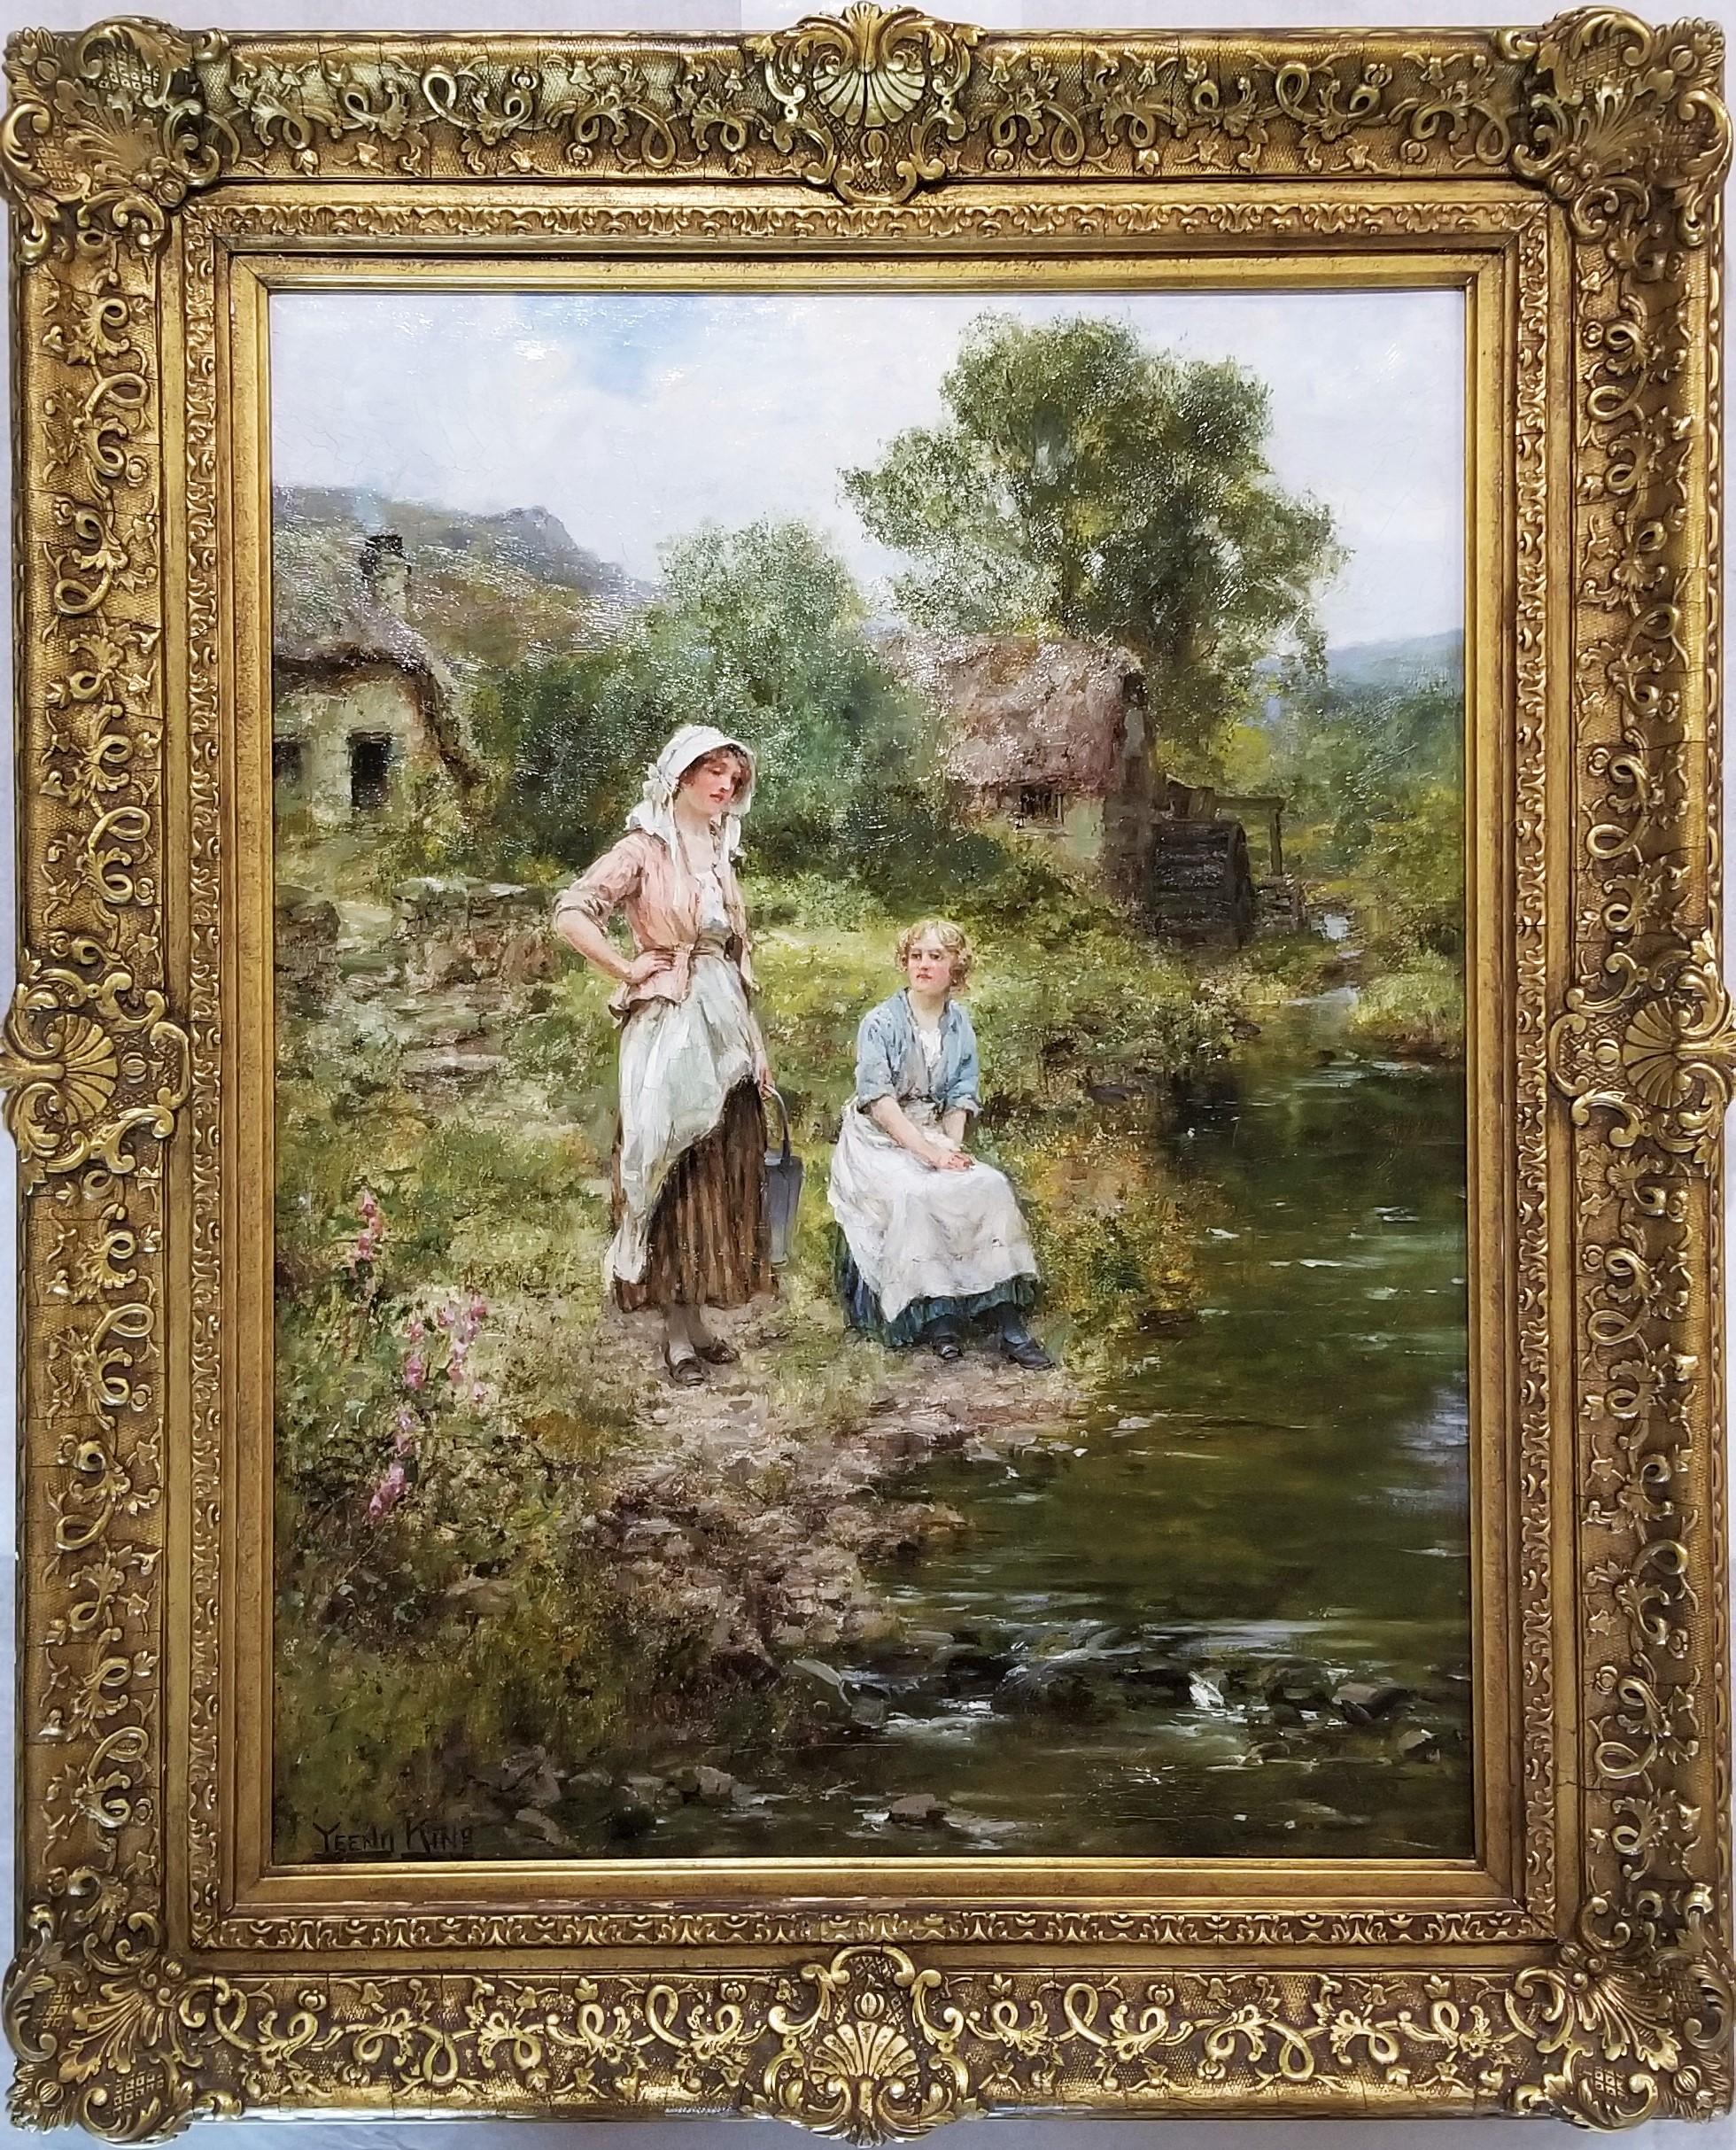 Fetching Water by the River /// Impressionnisme britannique Yeend King peinture à l'huile  - Painting de Henry John Yeend King